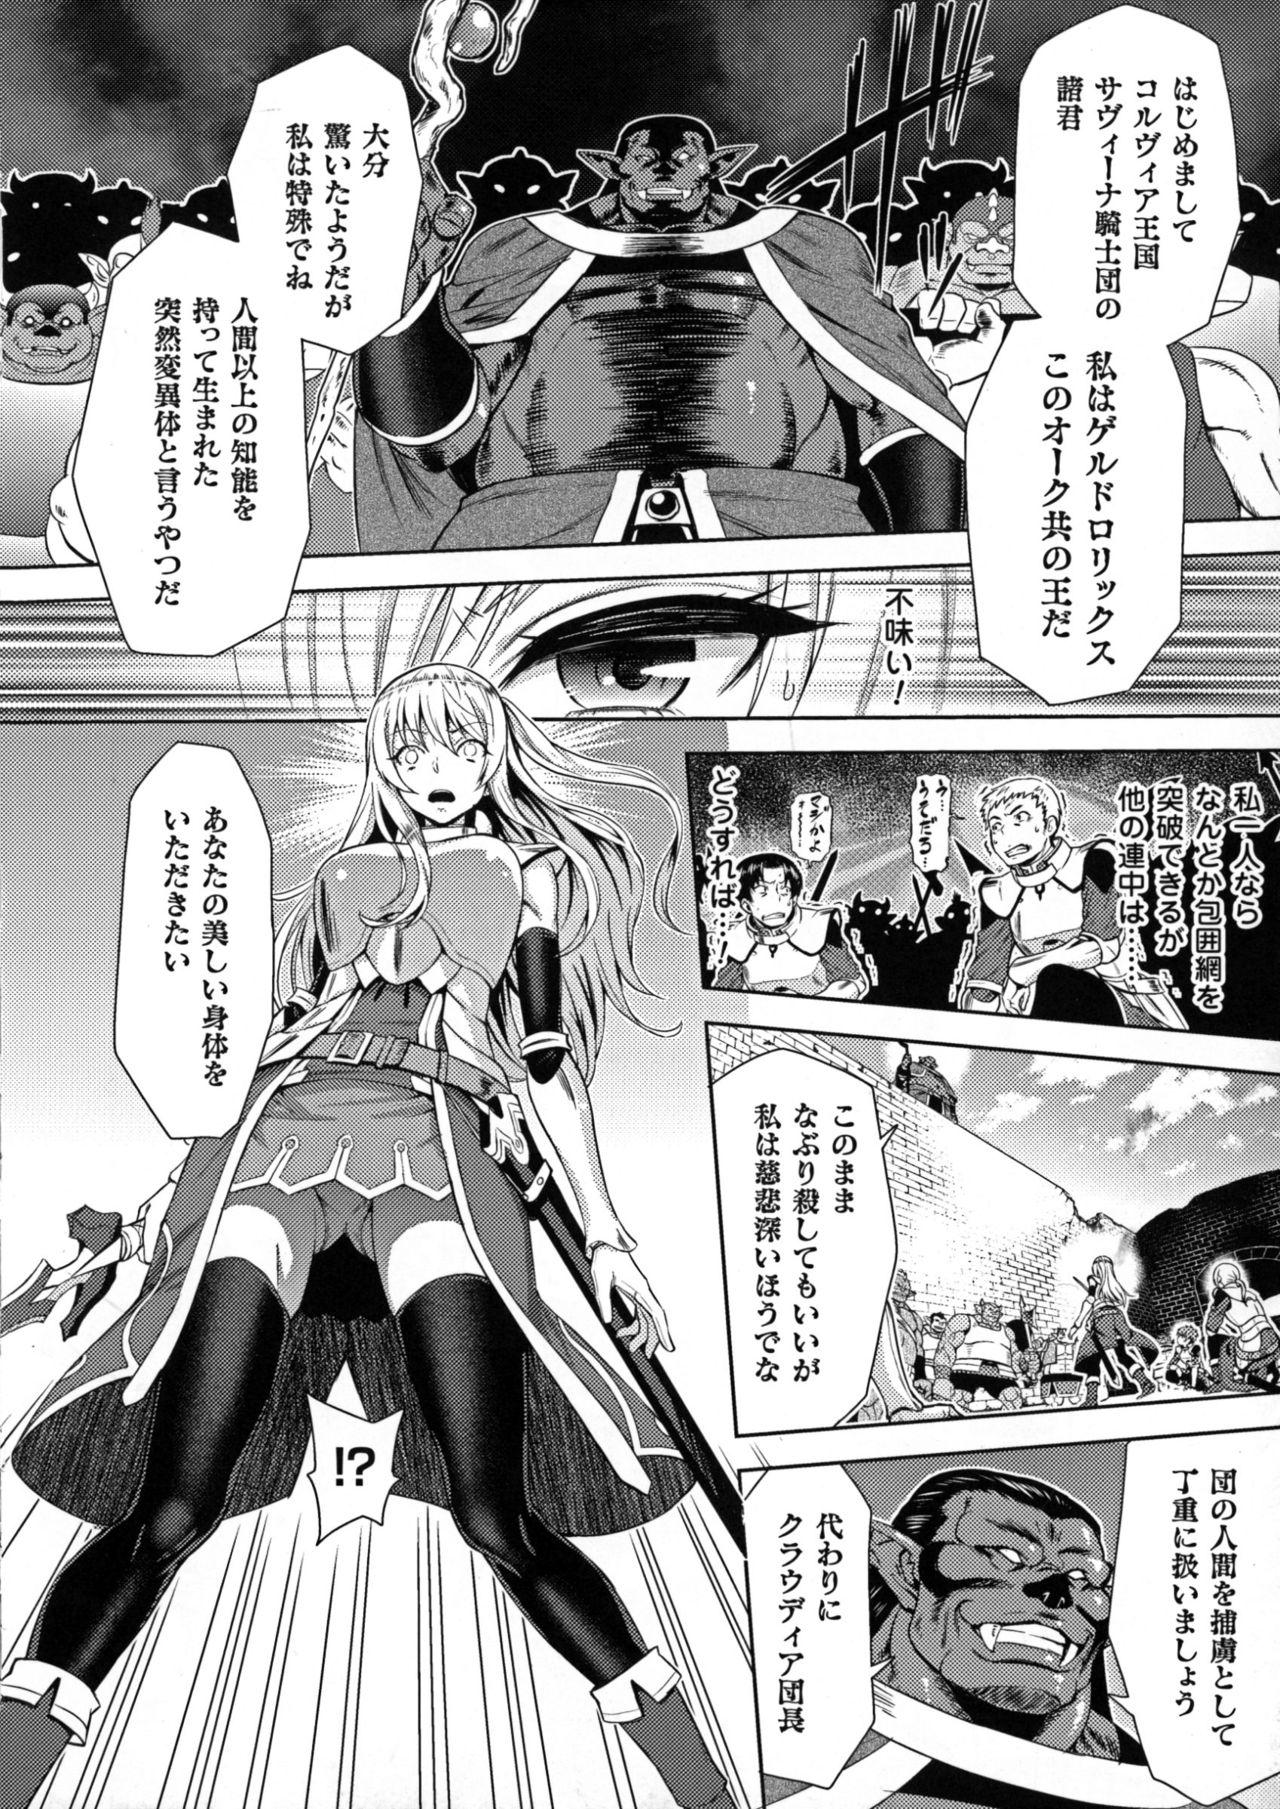 Seigi no Heroine Kangoku File DX Vol. 7 11